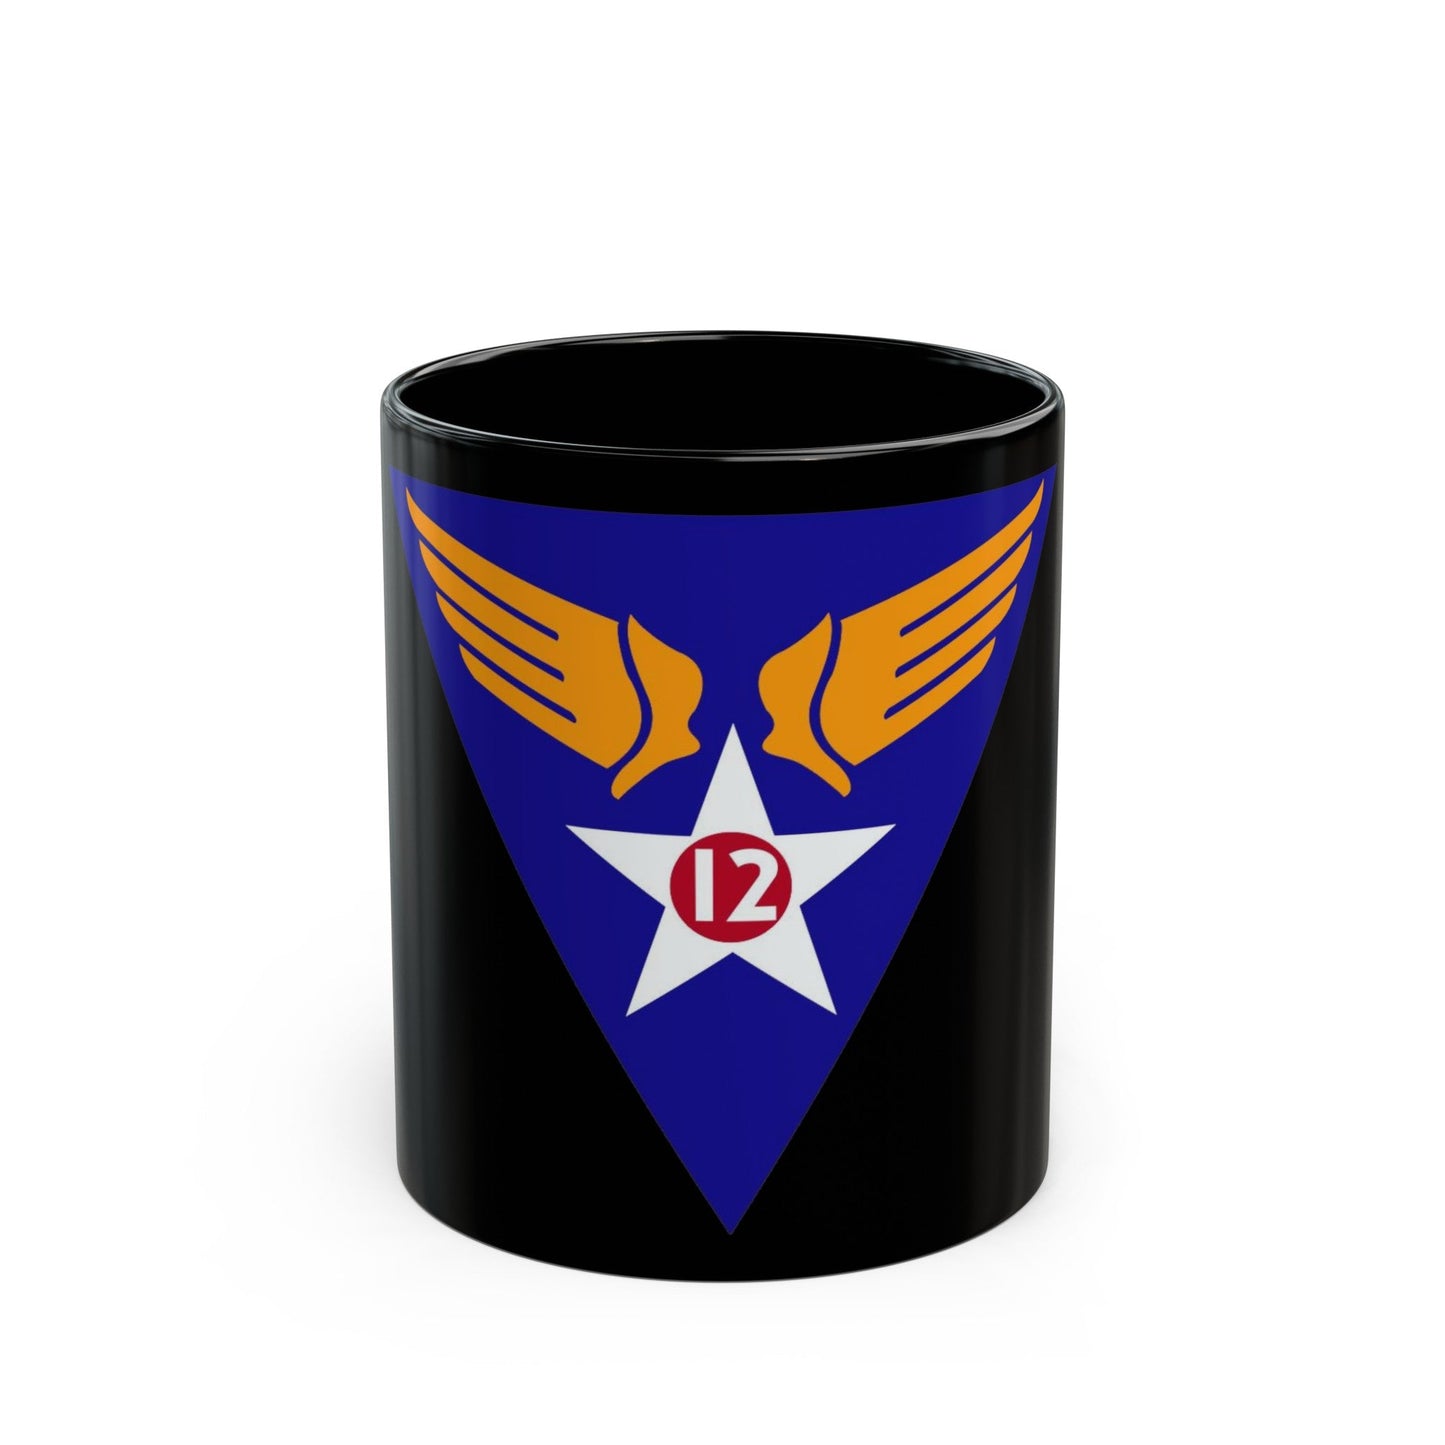 12 Air Force (U.S. Army) Black Coffee Mug-11oz-The Sticker Space